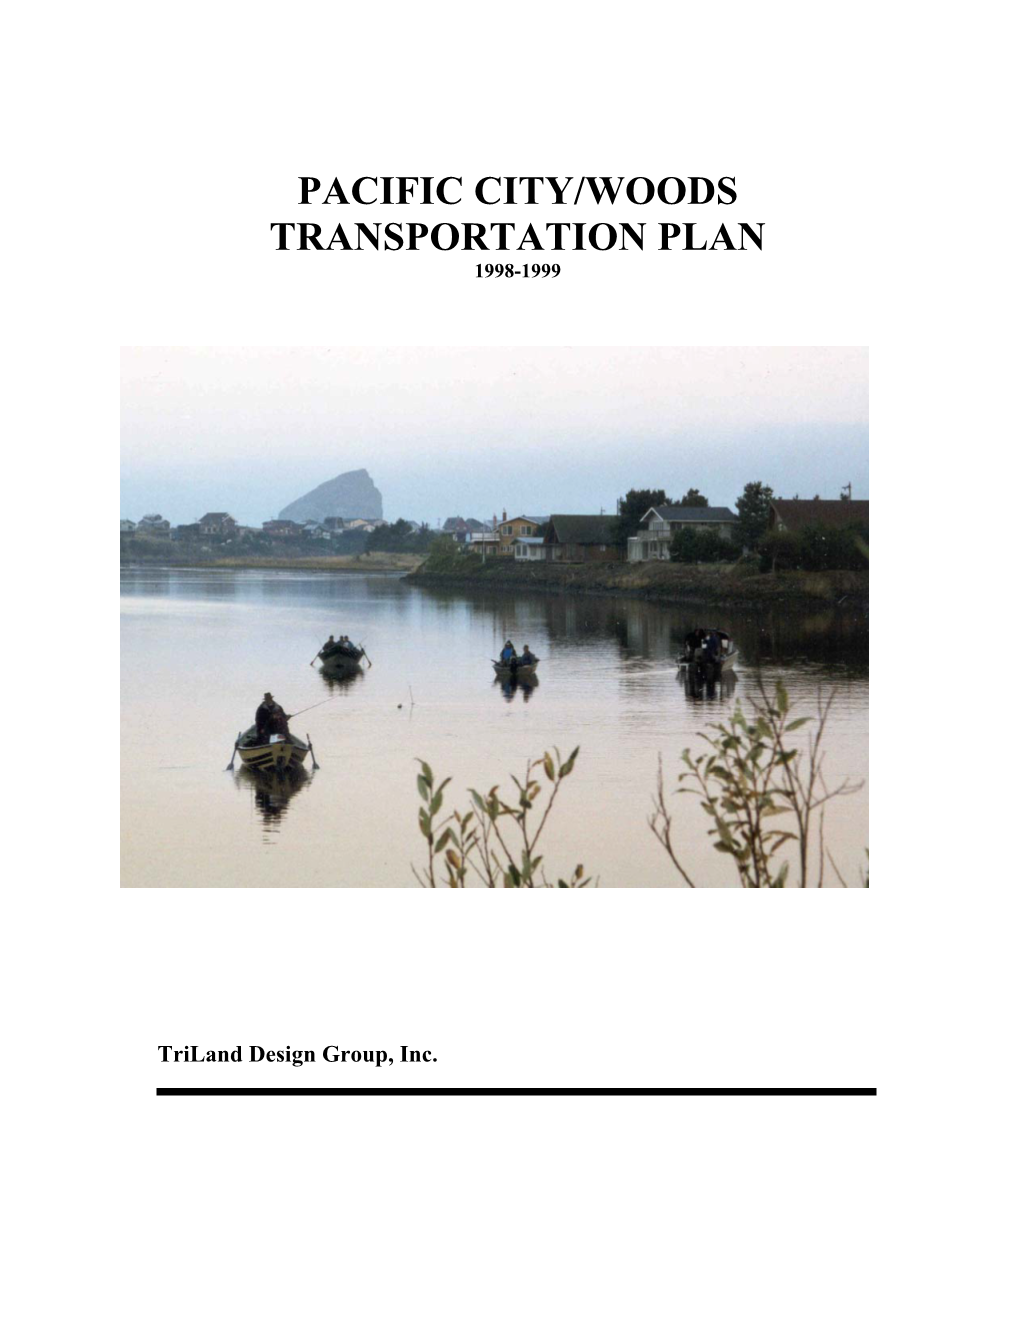 Pacific City/Woods Transportation Plan 1998-1999